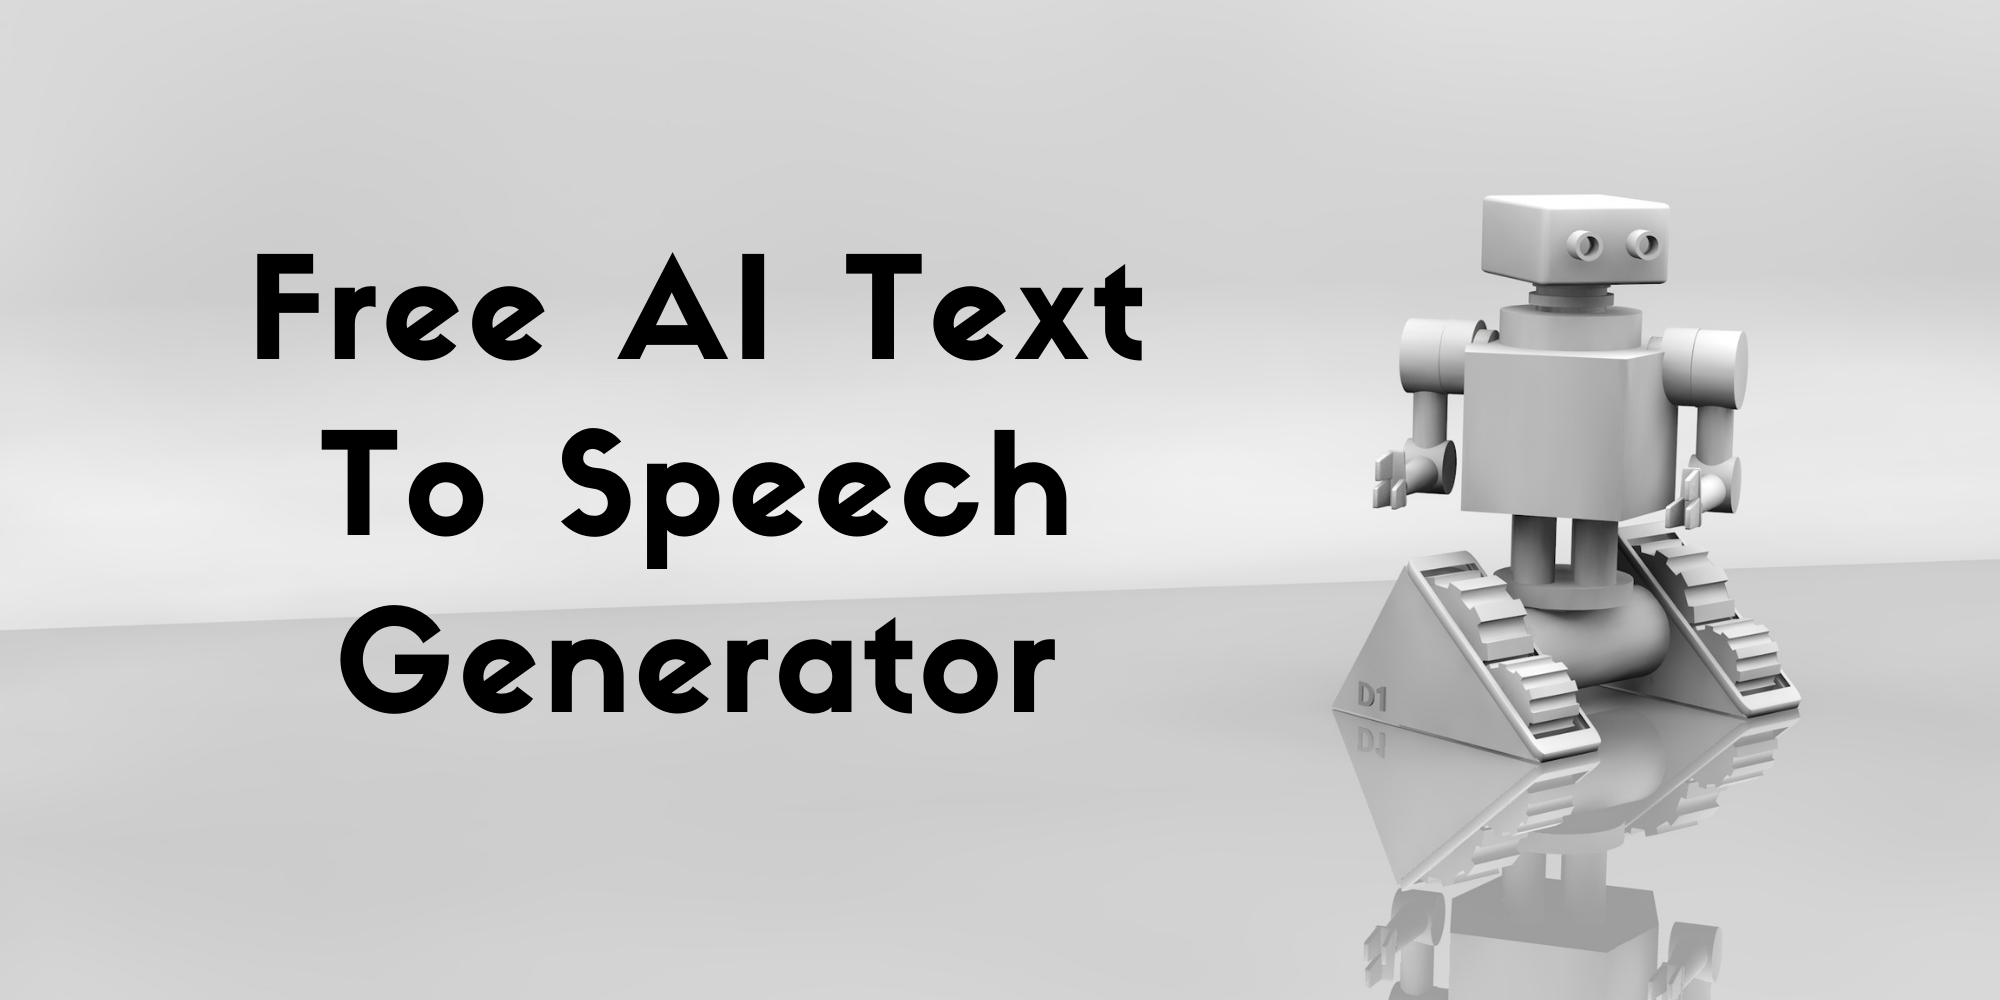 text to speech generator reddit